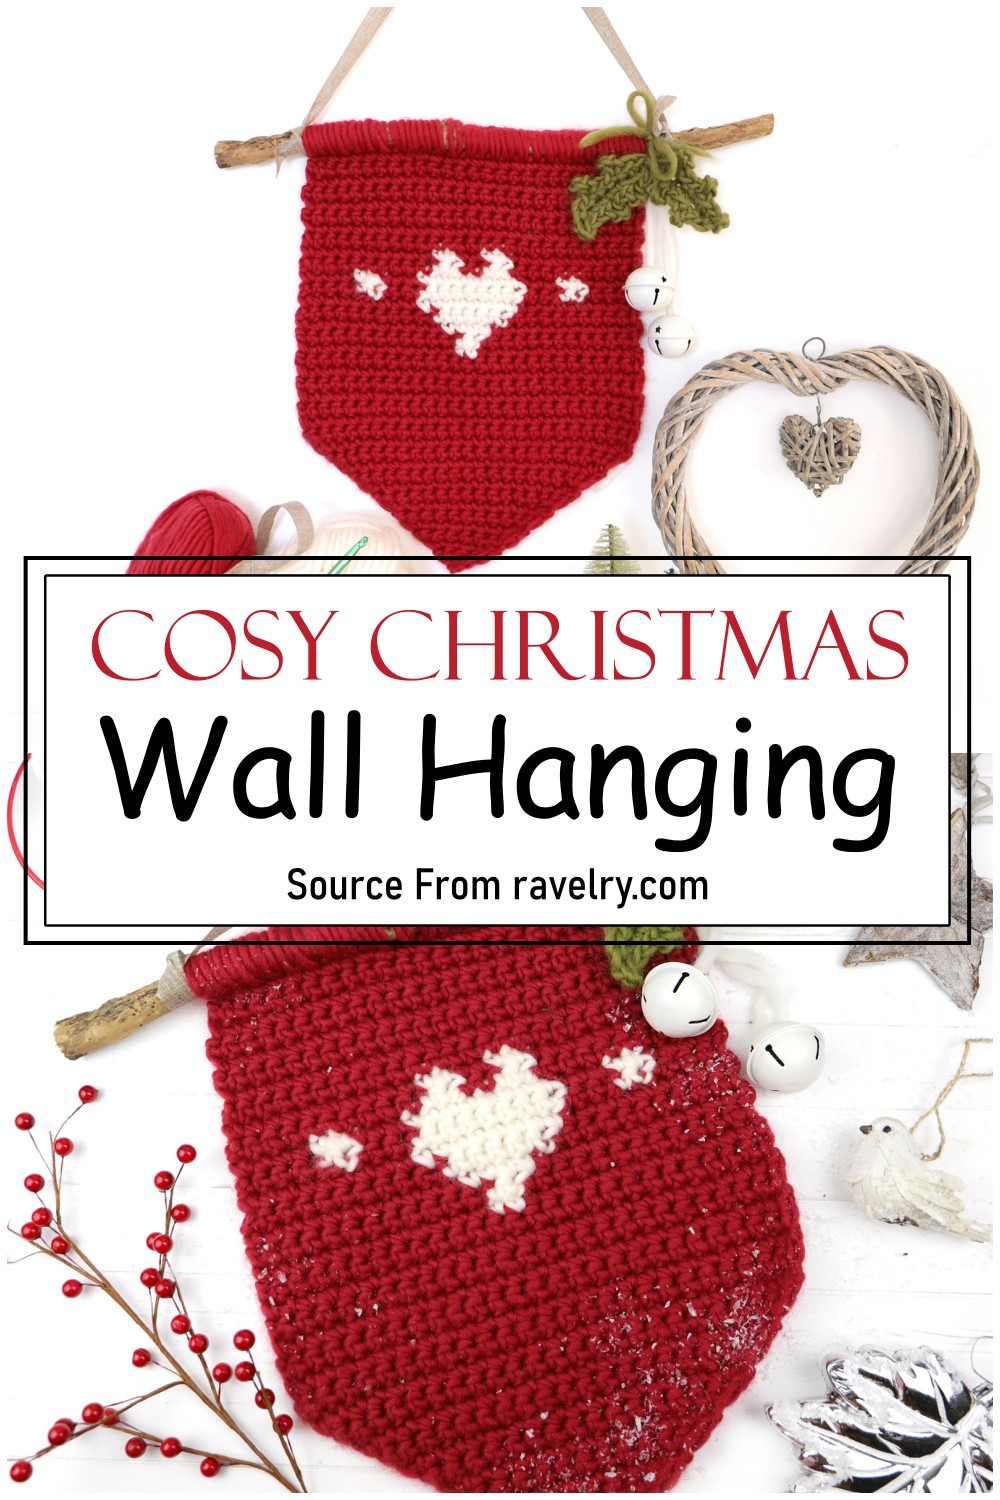 Cosy Christmas Wall Hanging